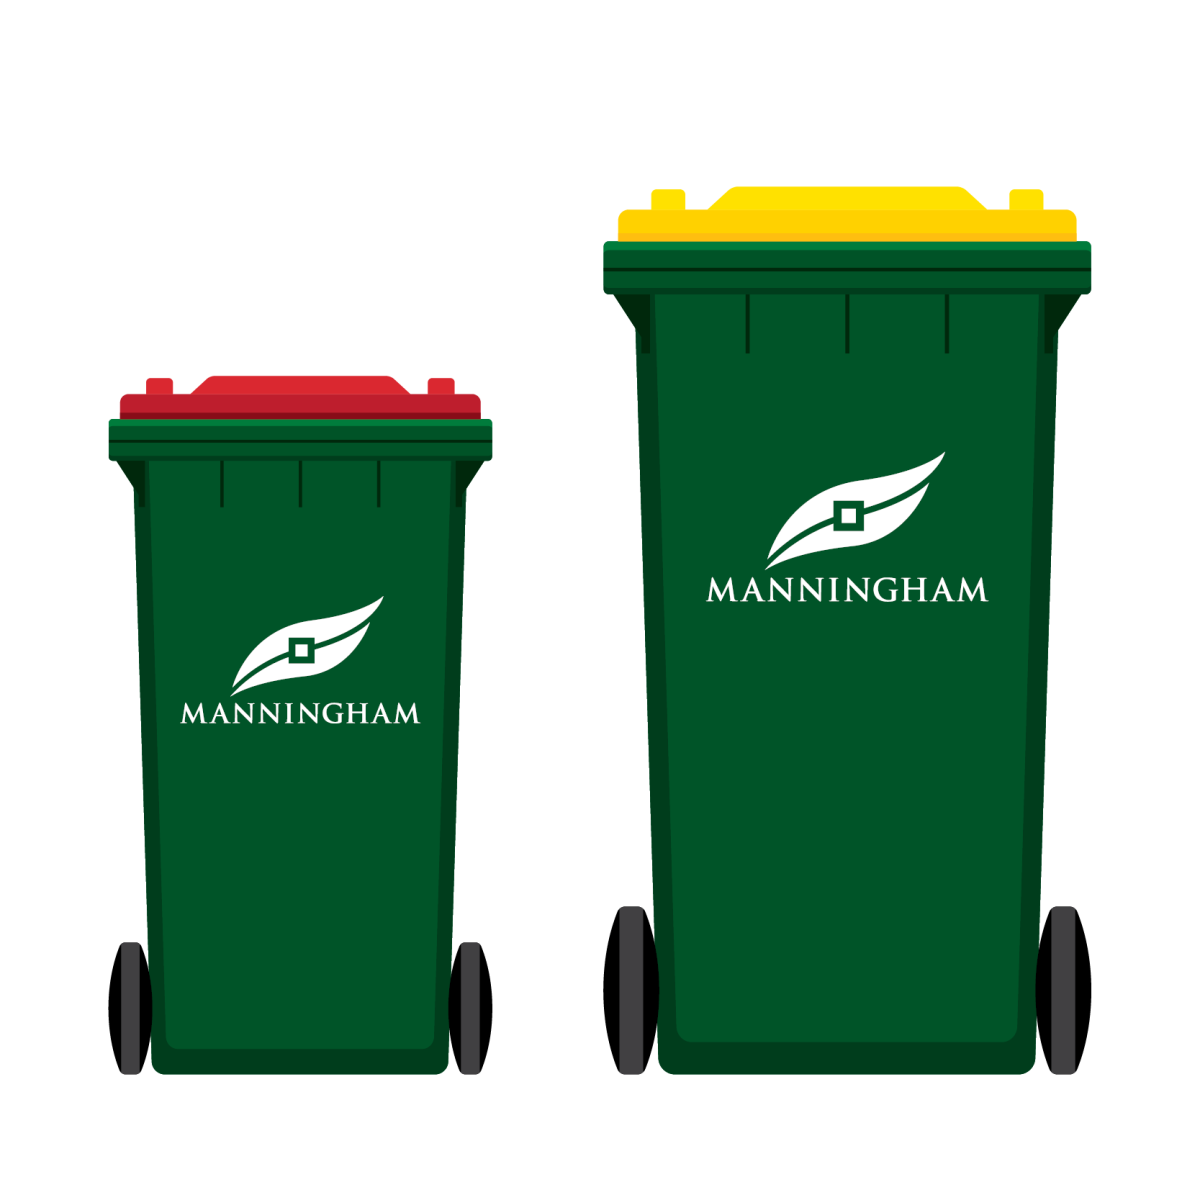 Image of red lid bin and yellow lid bin